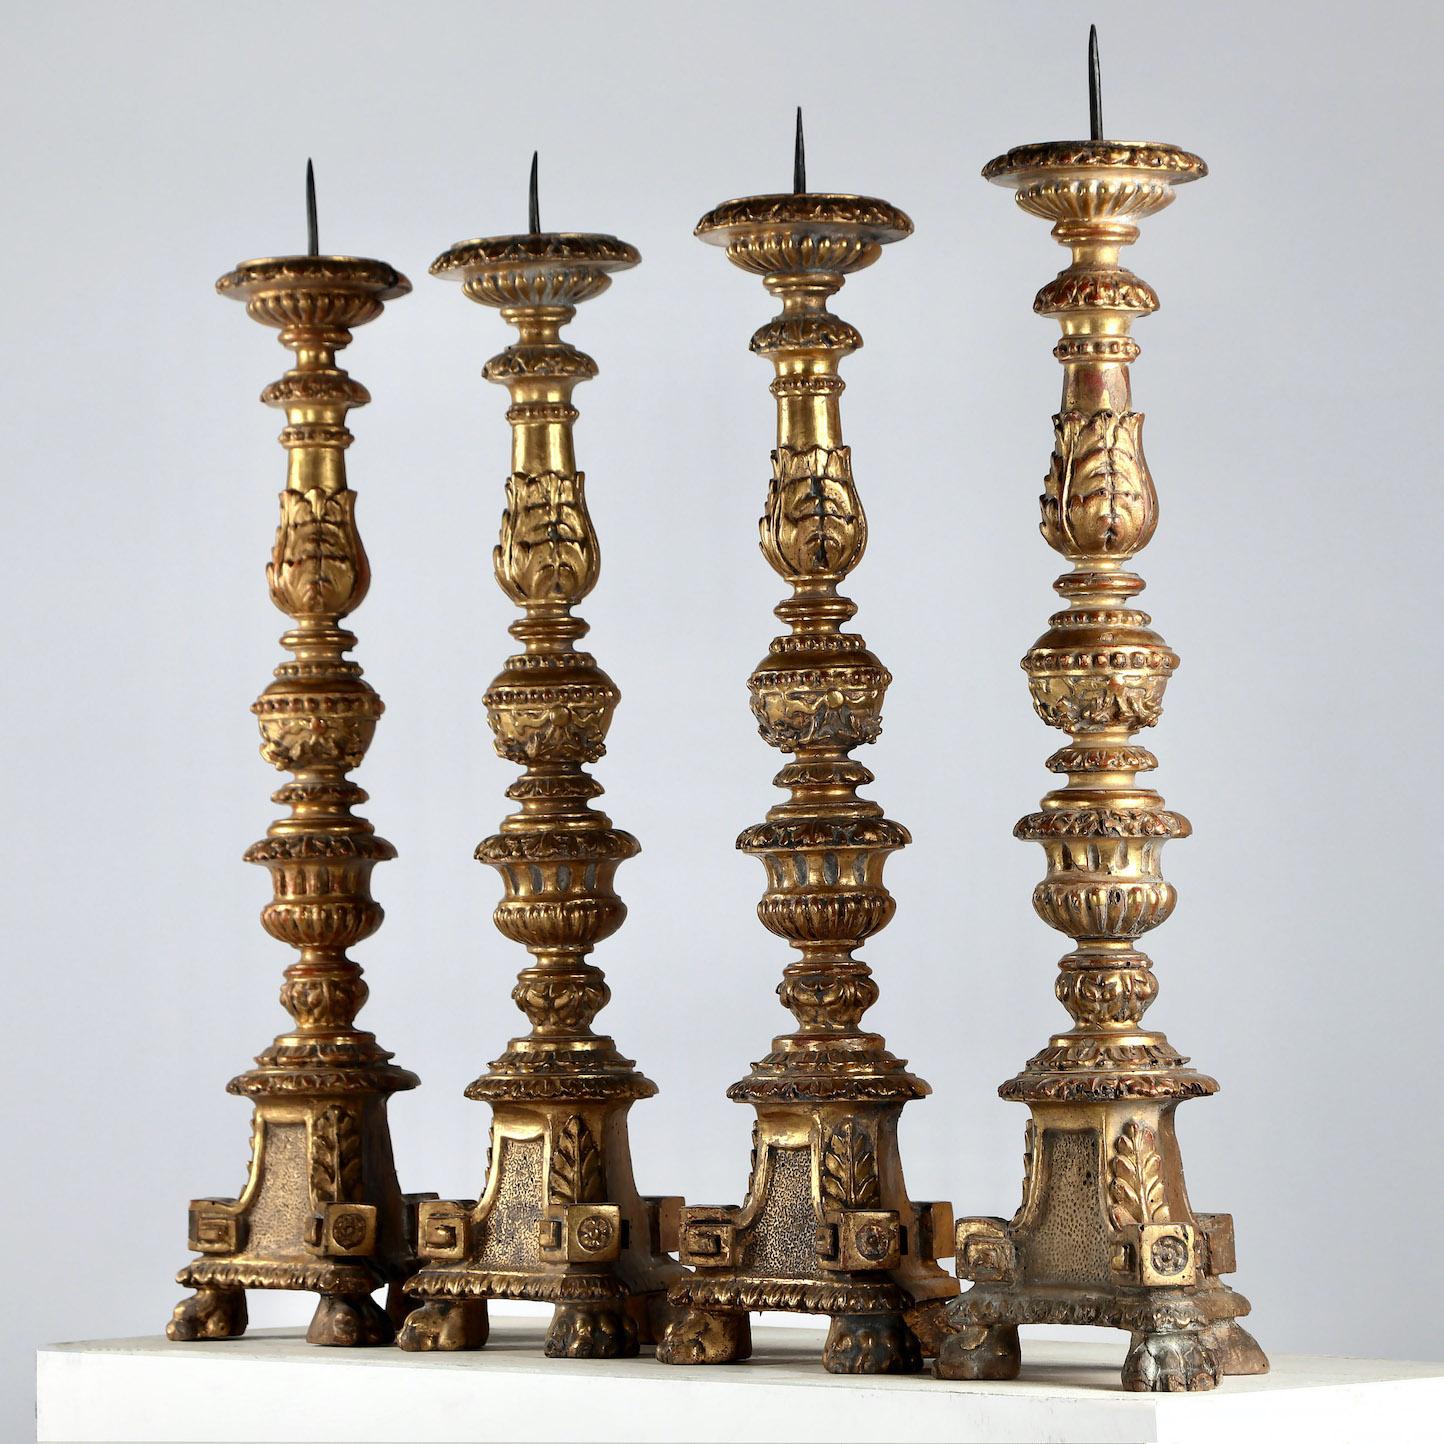 A set of four 18th century Italian candlesticks

” A true set of 18th century Italian Altar candlesticks “

